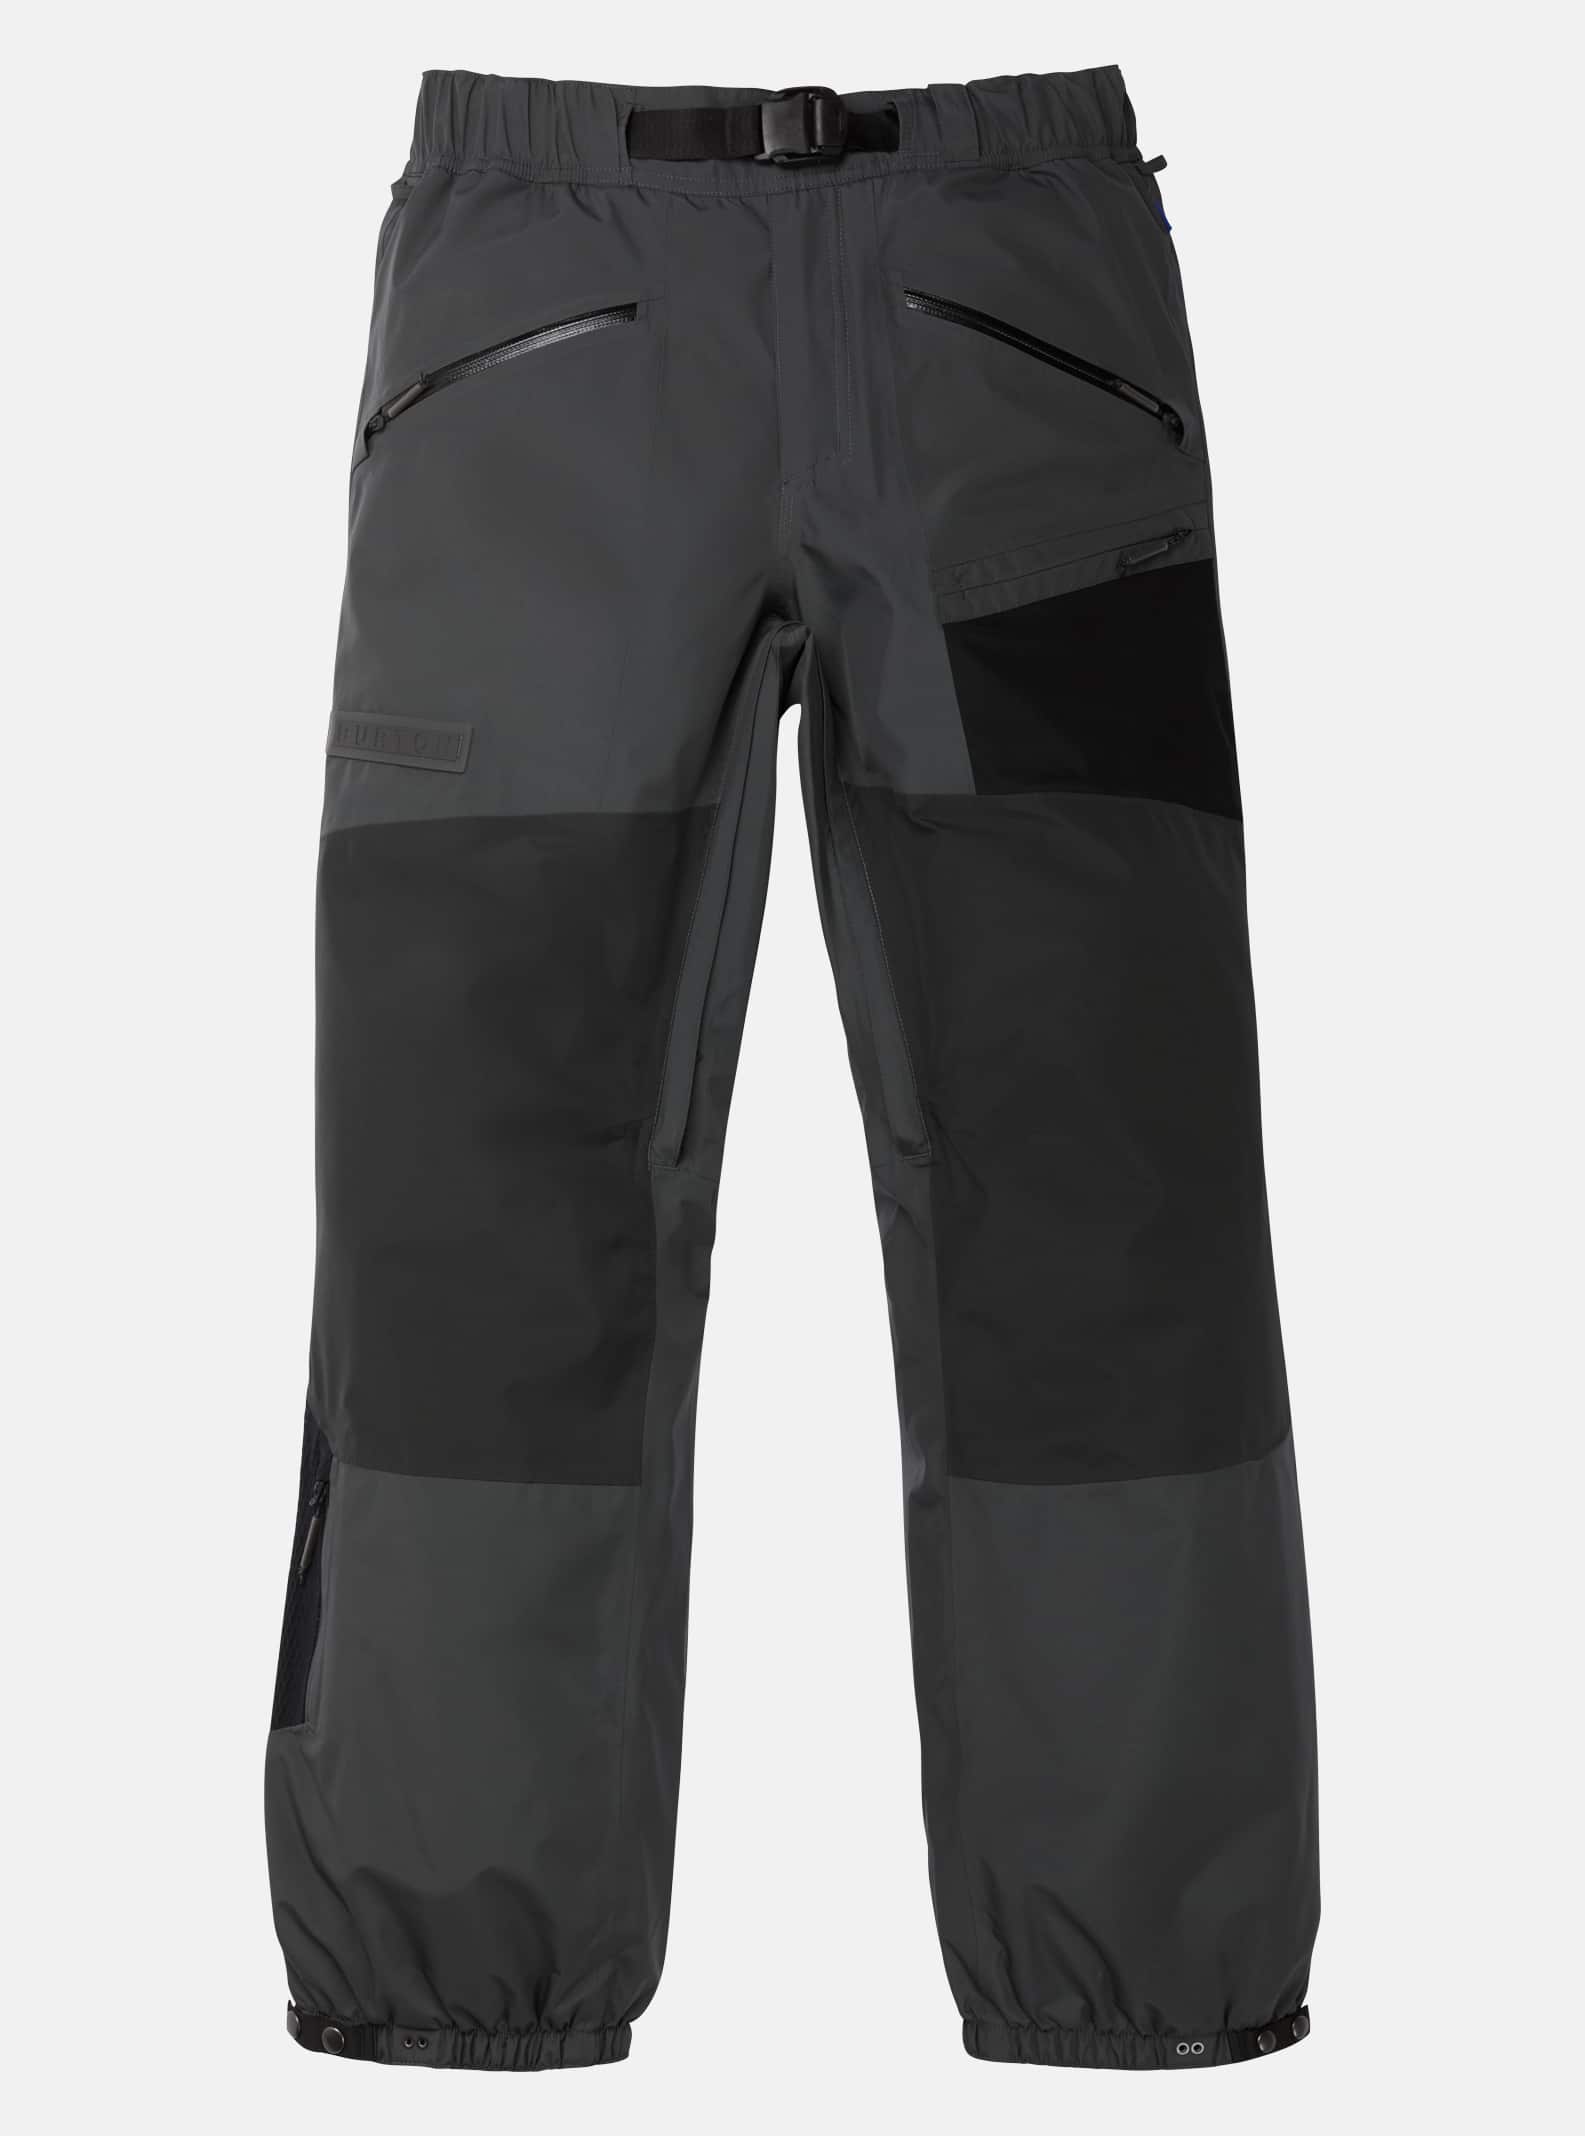 Men's Carbonate GORE-TEX 2L Anorak Jacket